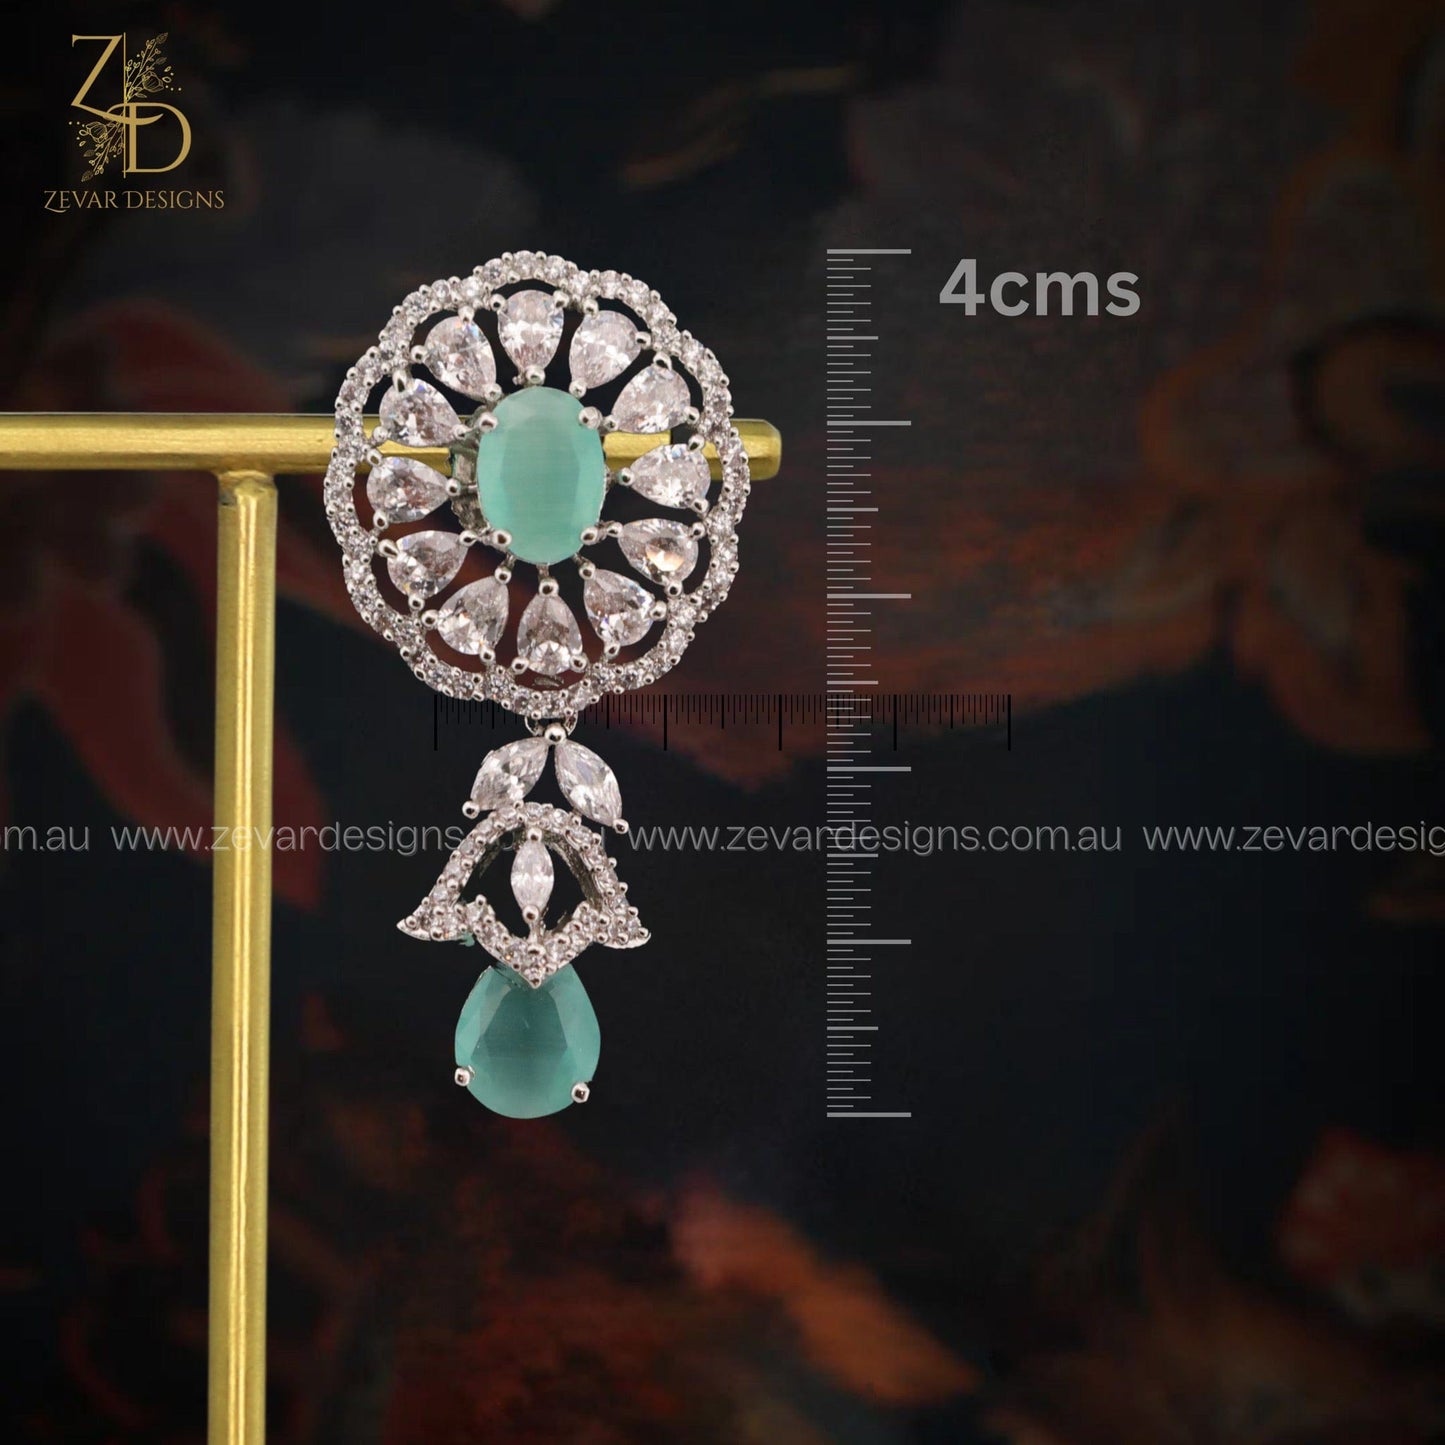 Zevar Designs Necklace Sets - AD AD Choker set with Mint Drops